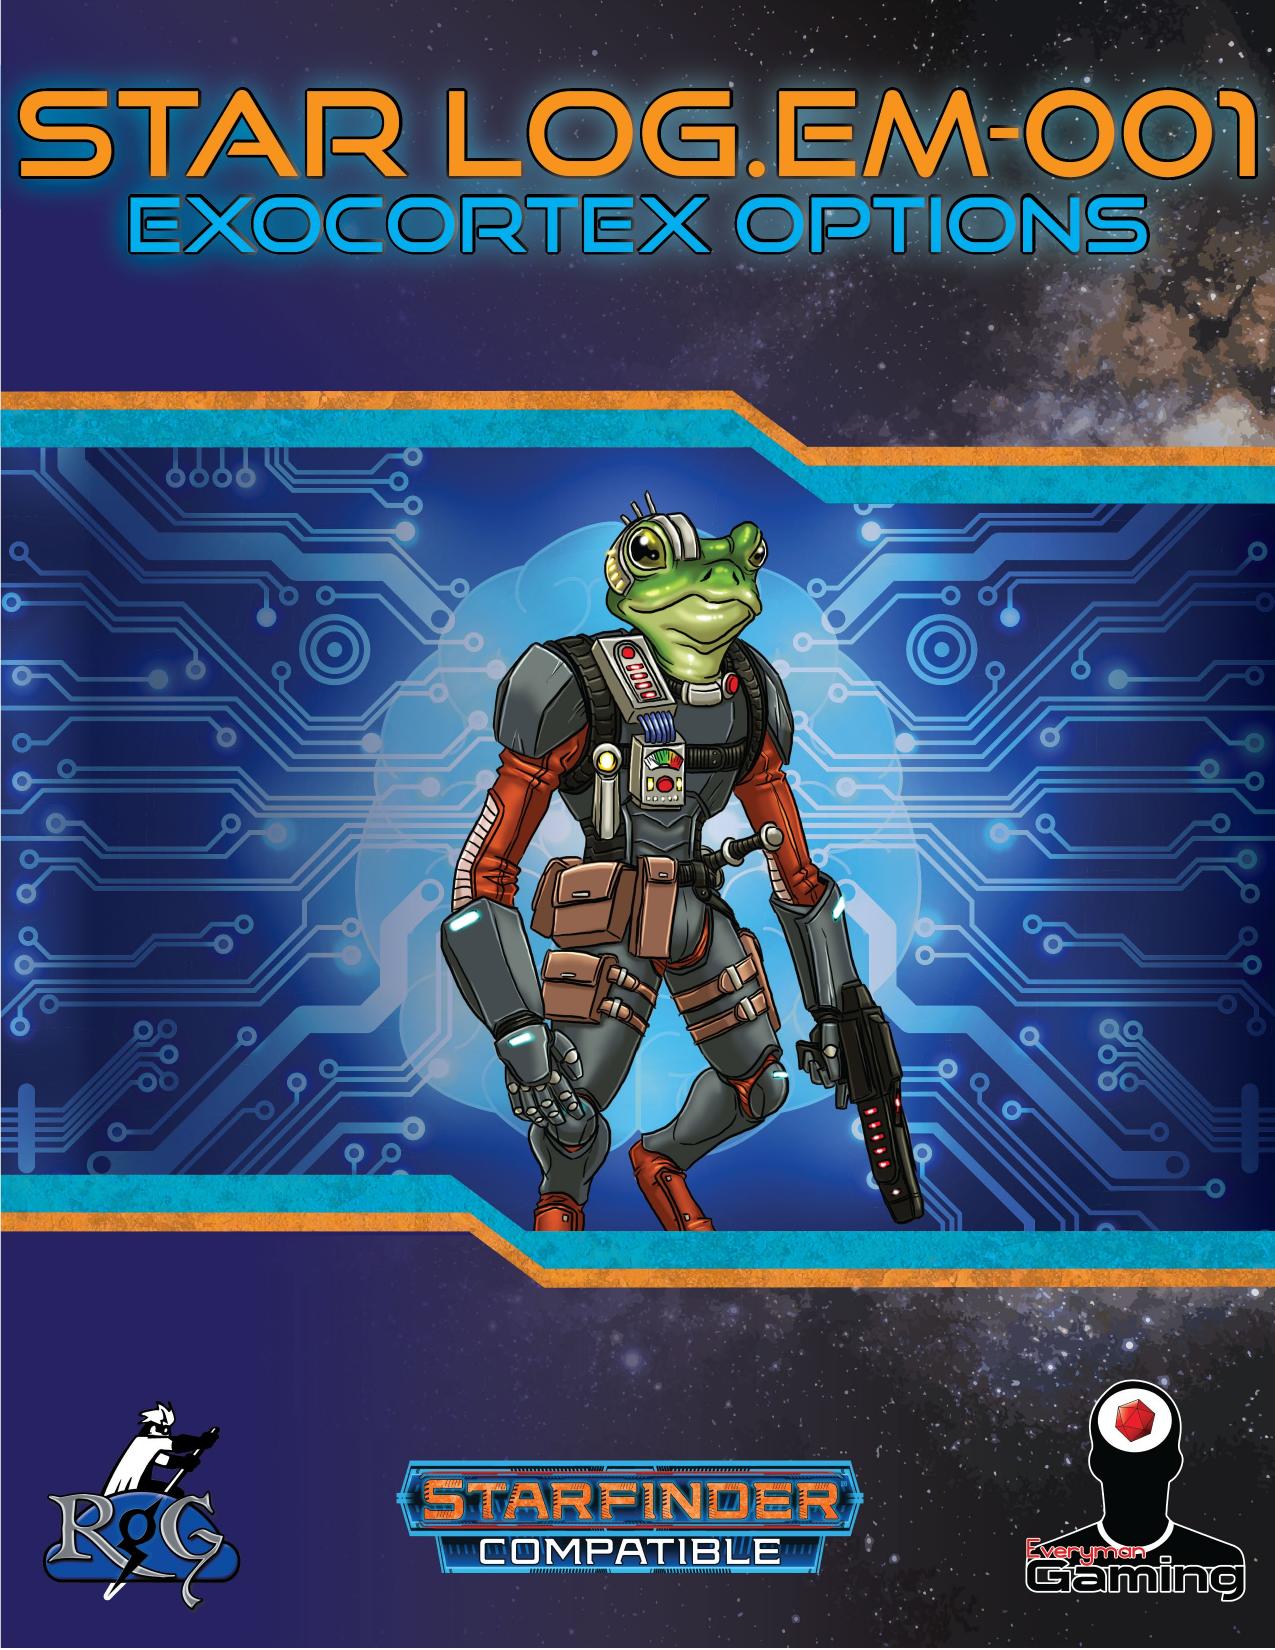 Star LogEM-001 Exocortex Options